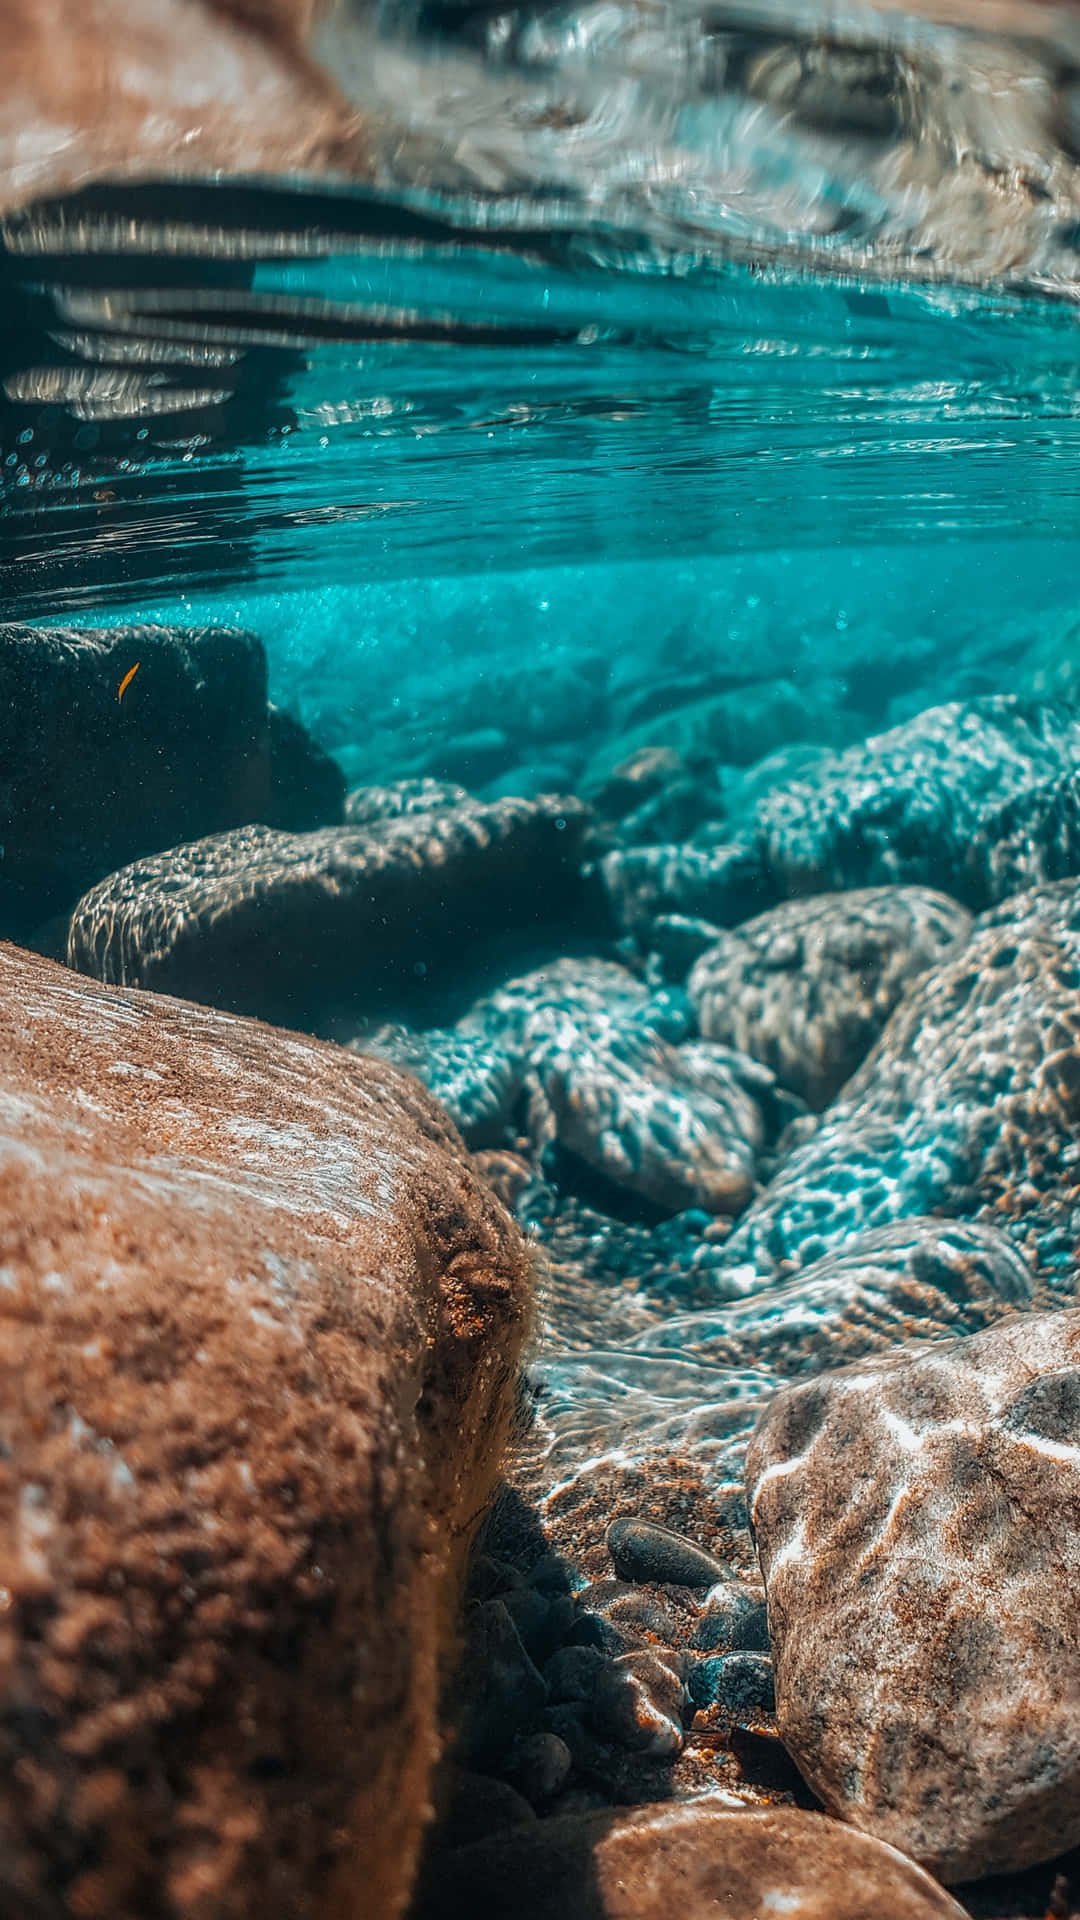 Mossy Rocks Underwater Iphone Wallpaper